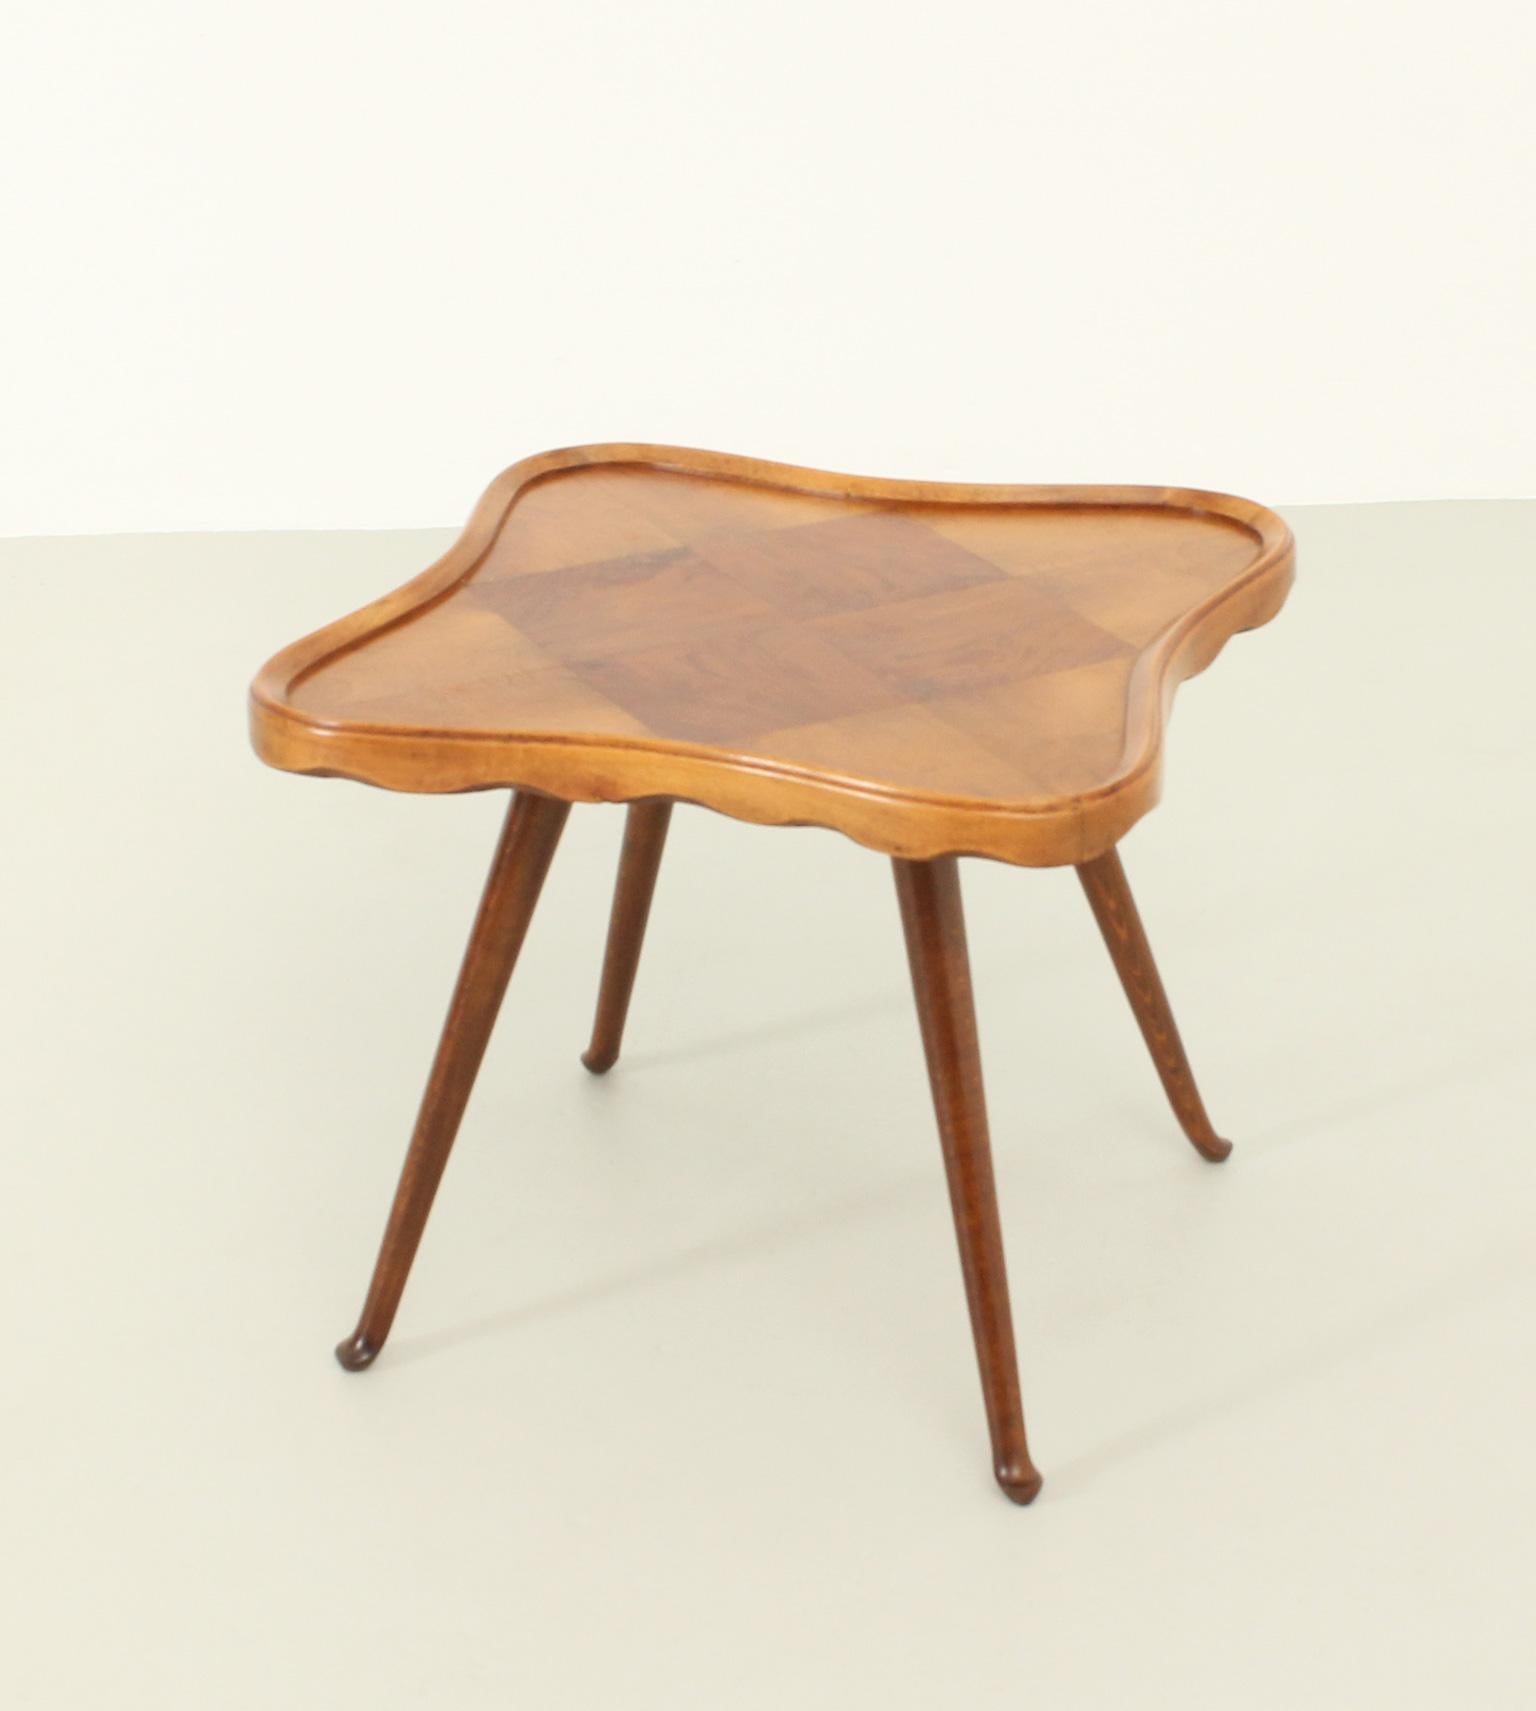 Side table designed in 1940's by Osvaldo Borsani for Arredamenti Borsani, Italy. Beech wood structure and top in geometric walnut veneer. 